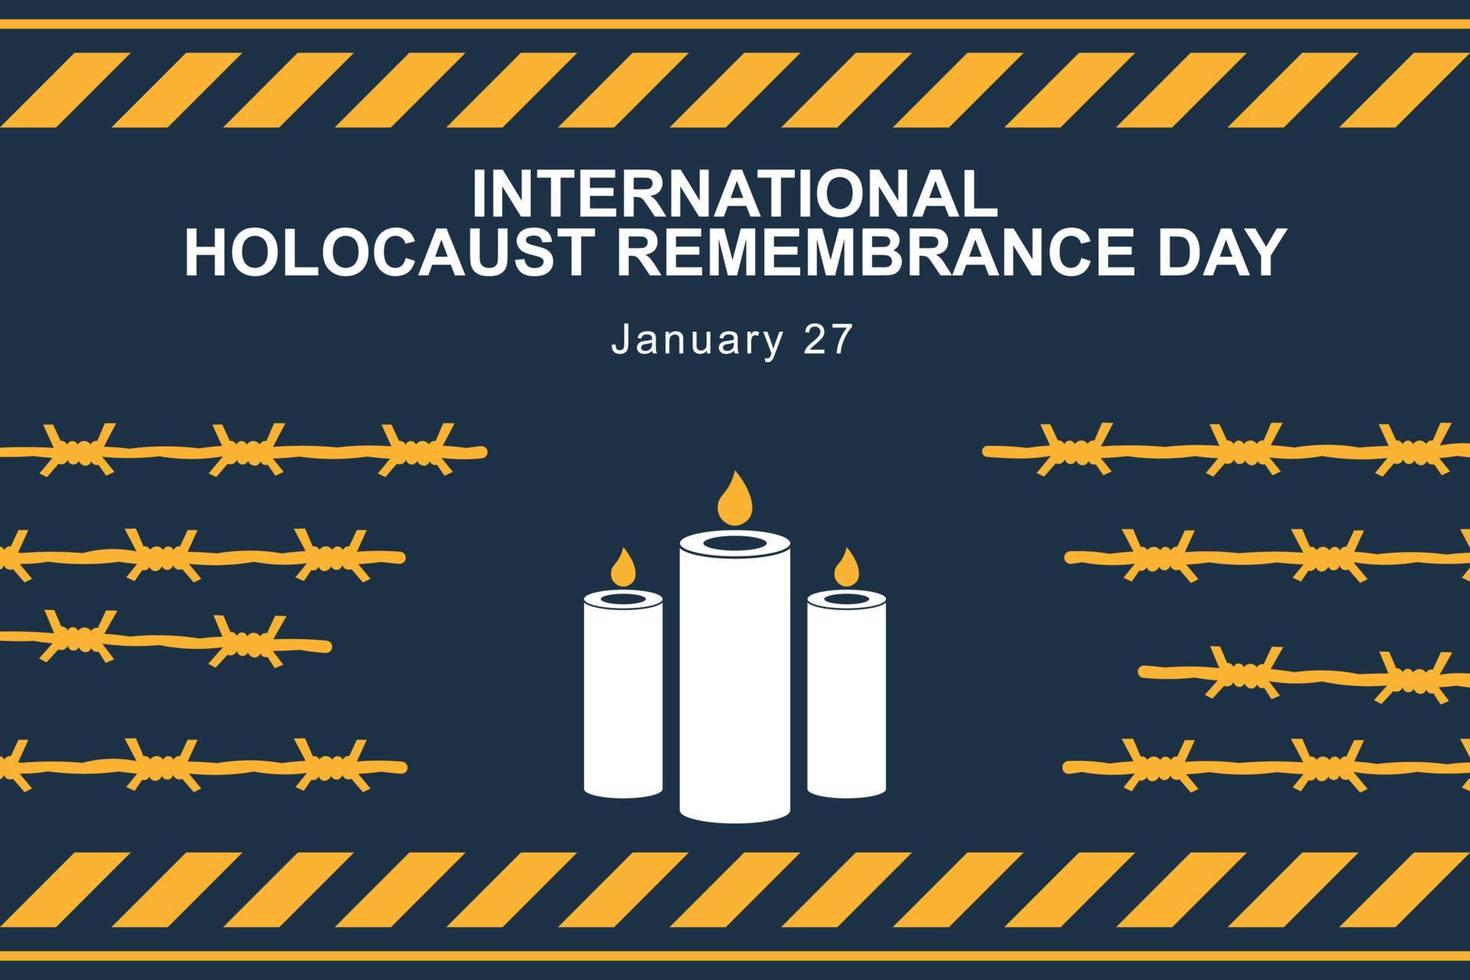 internationale holocaust herdenkingsdag achtergrond. vector